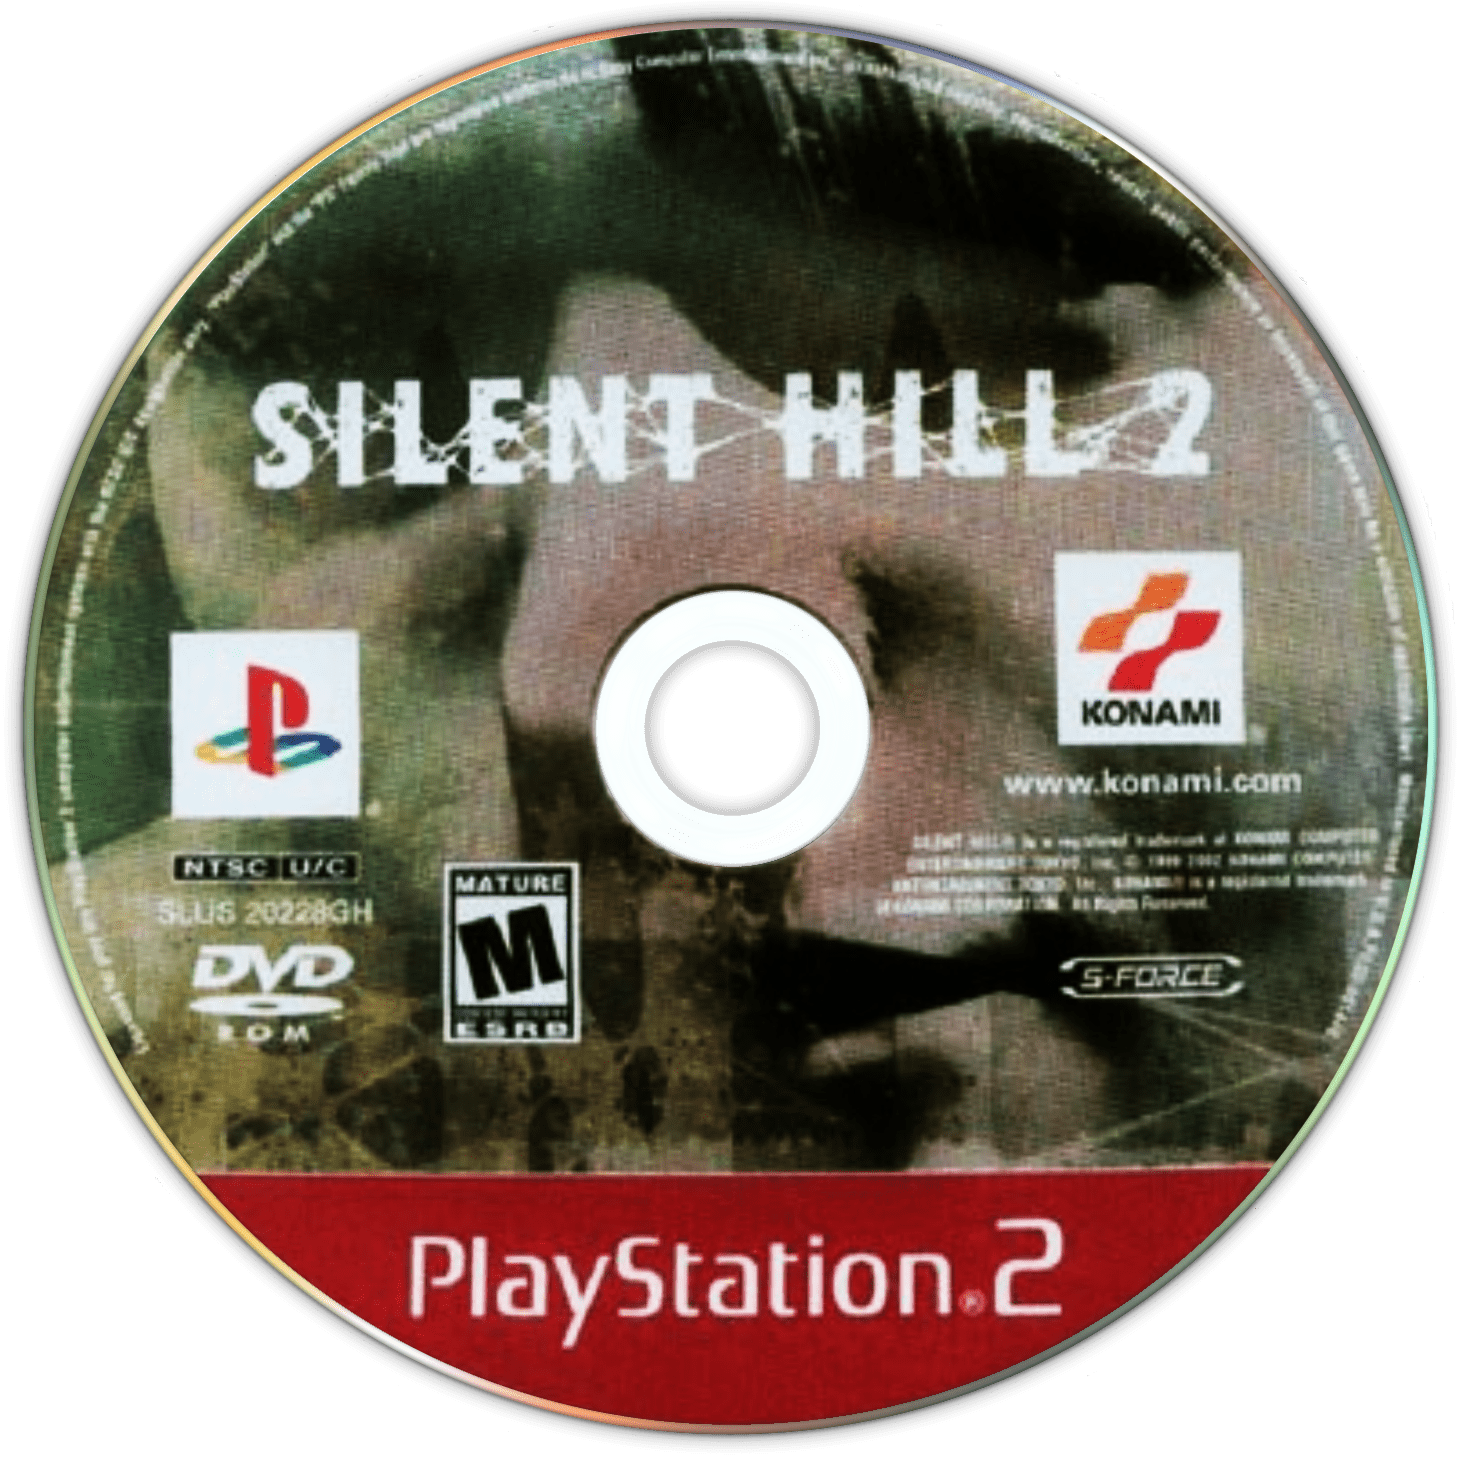 Silent Hill ps2 диск. Обложка диска Silent Hill 2 ps2. Silent Hill 2 диск. Silent Hill 2 ps2 диск. Silent hill director cut